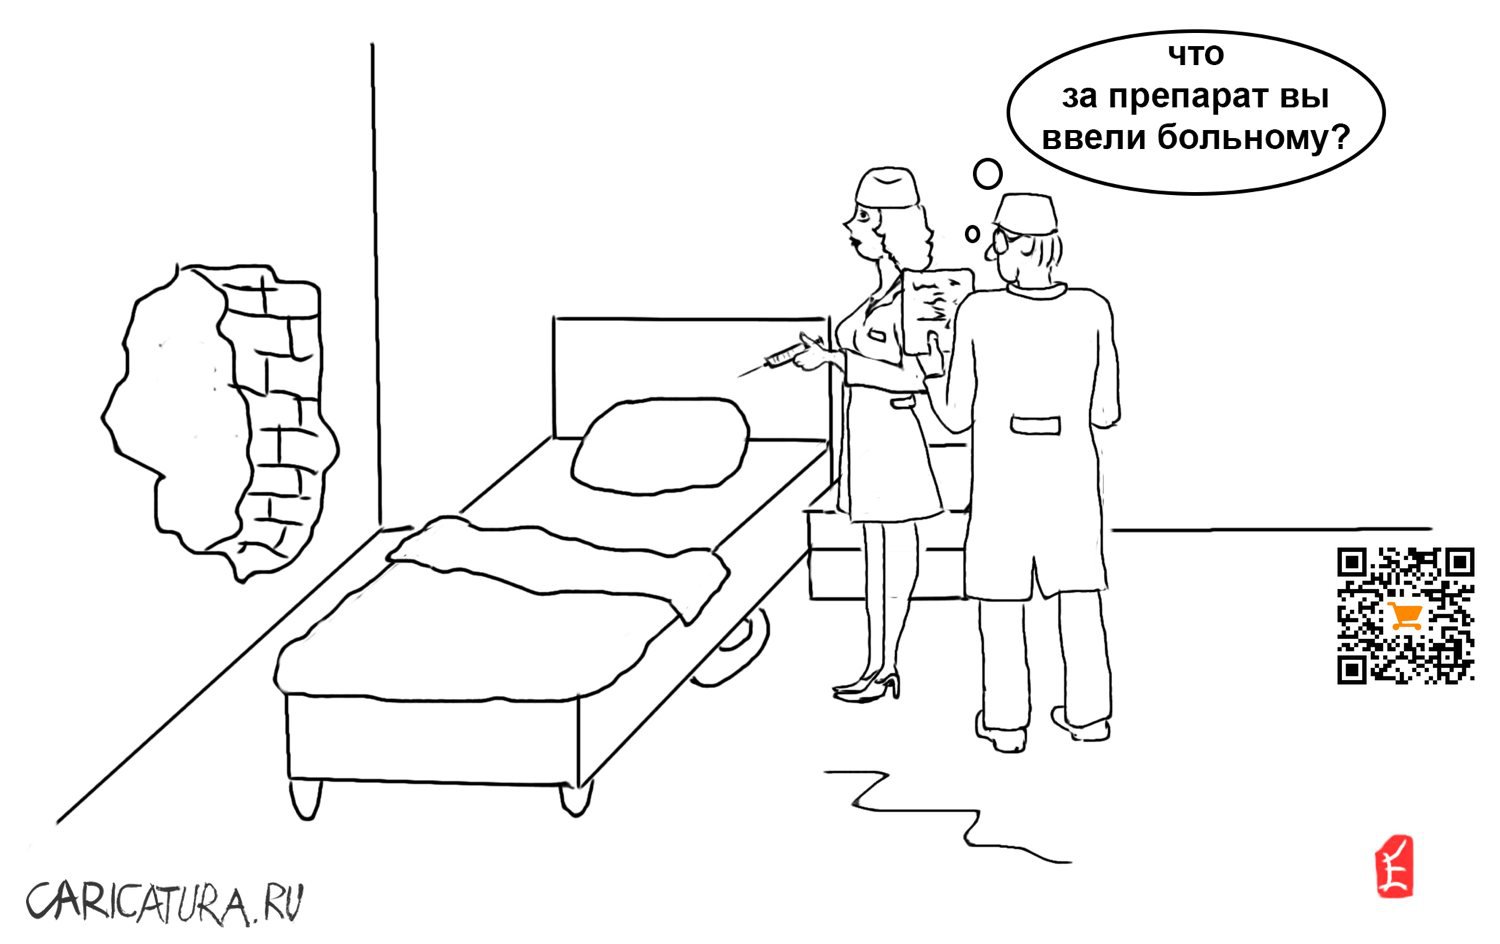 Карикатура "Укол", Евгений Лапин